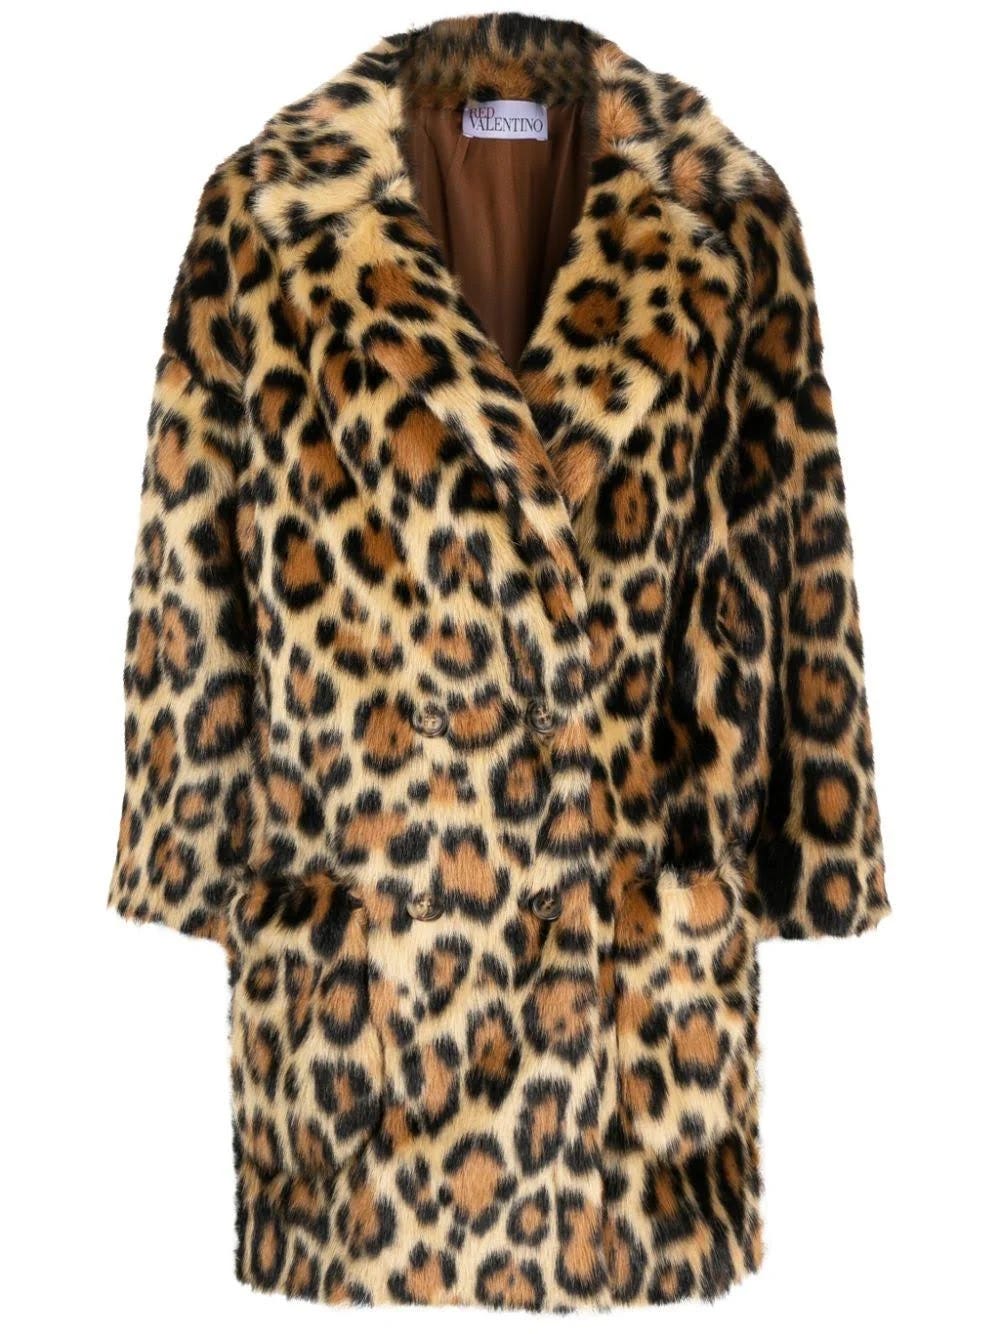 Cheetah Print Faux Fur Coat from Valentino | Image